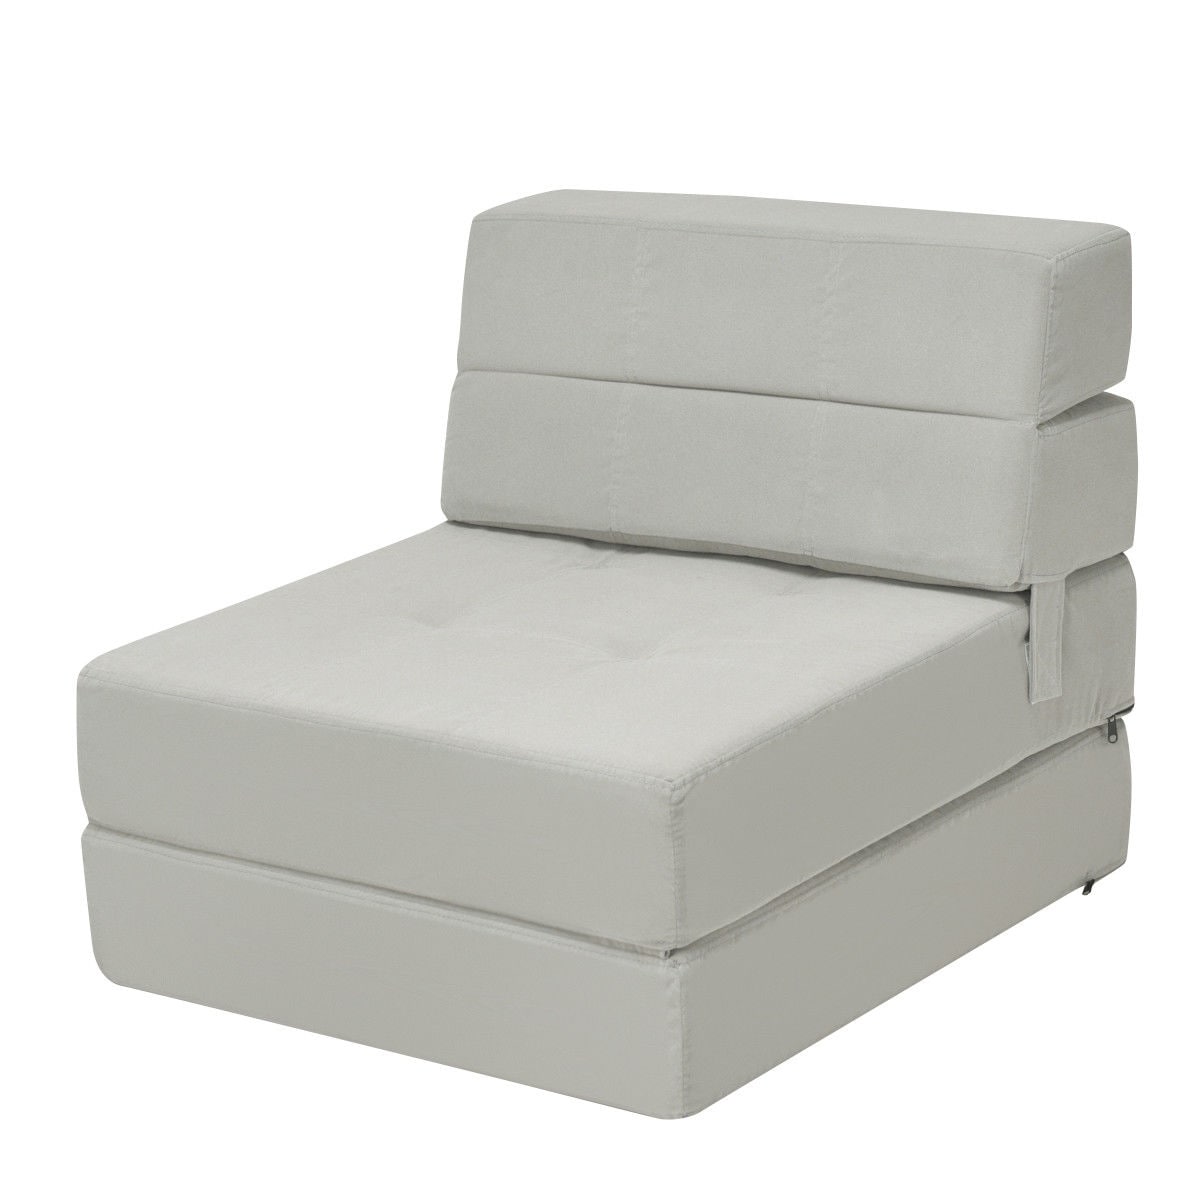 Burgundy 6 x 24 x 70 Sleeper Chair Folding Foam Bed, High Foam